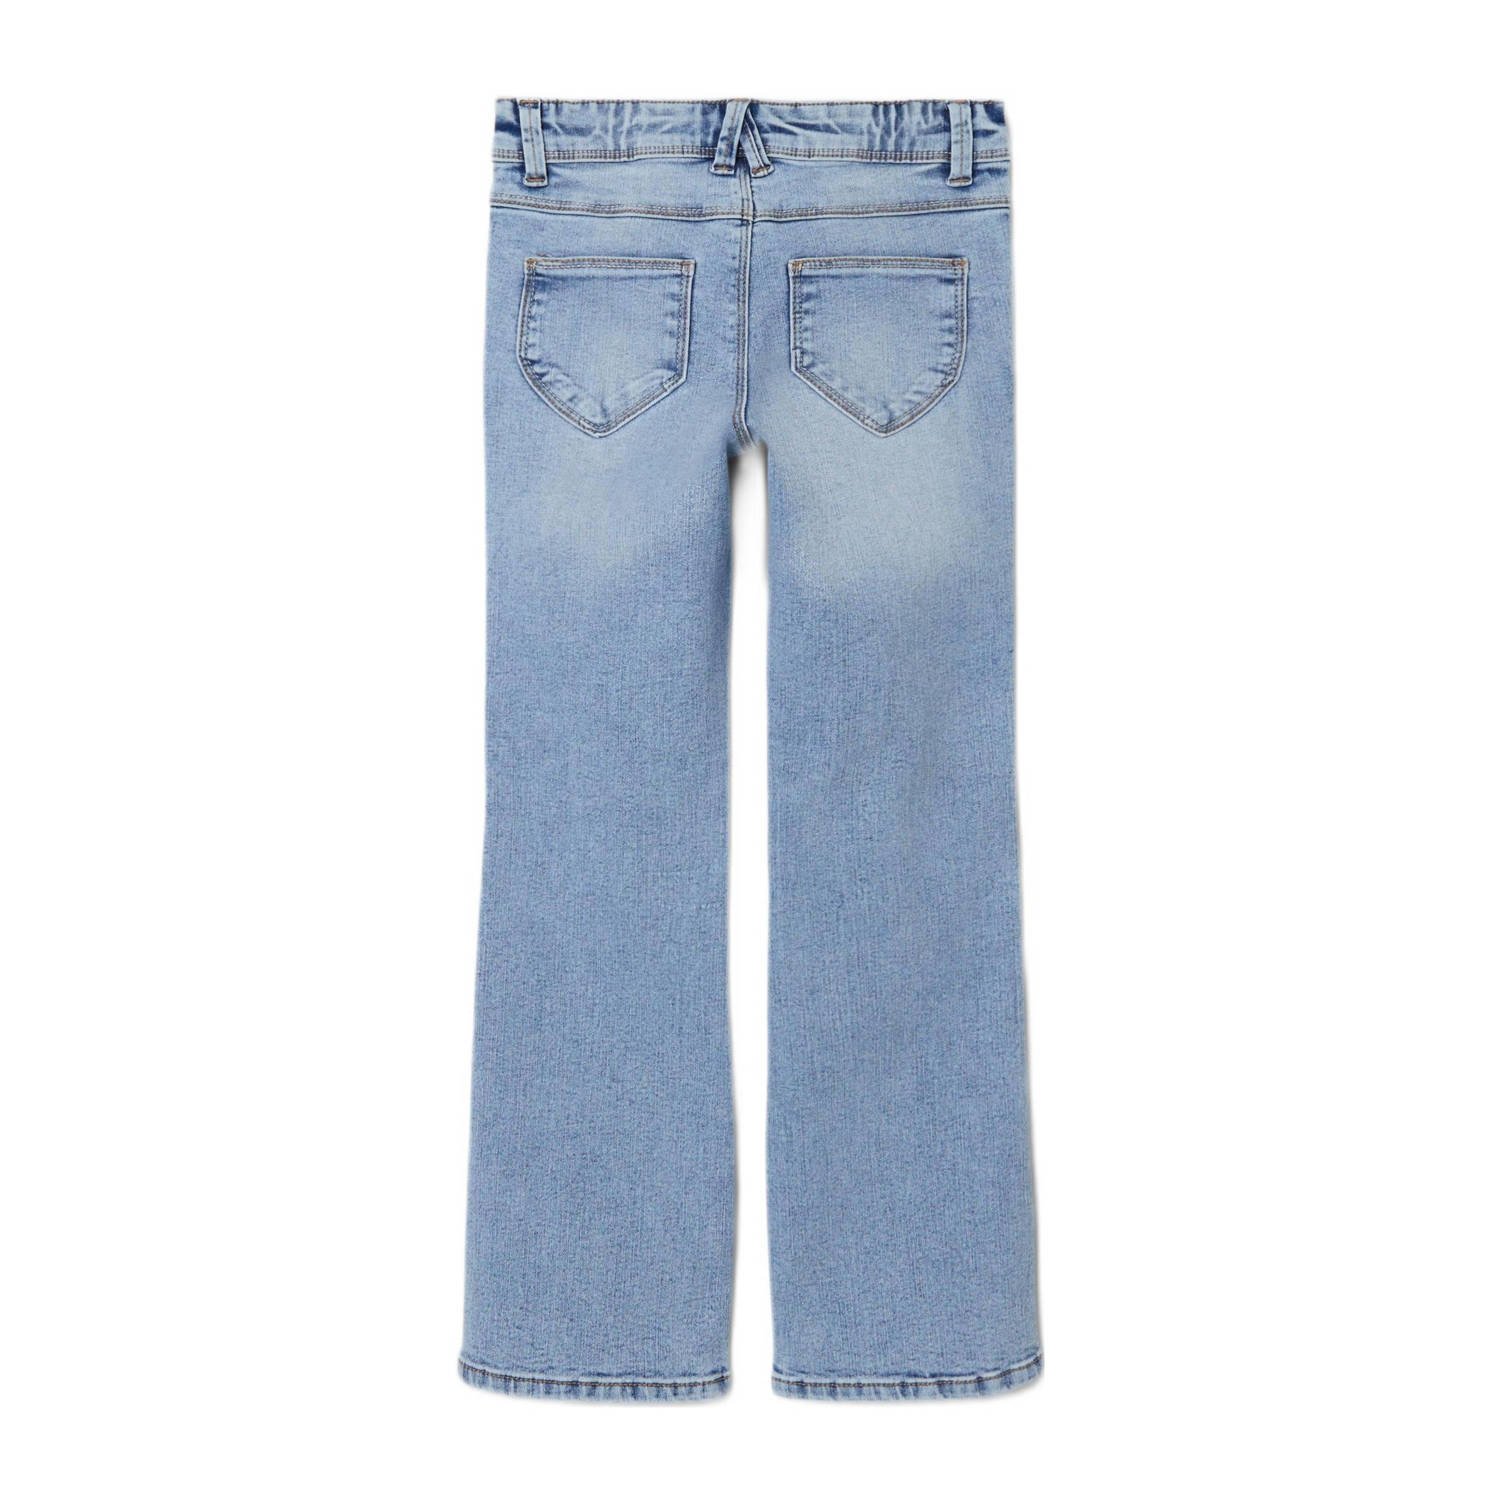 NAME IT KIDS straight fit jeans NKFPOLLY light blue denim